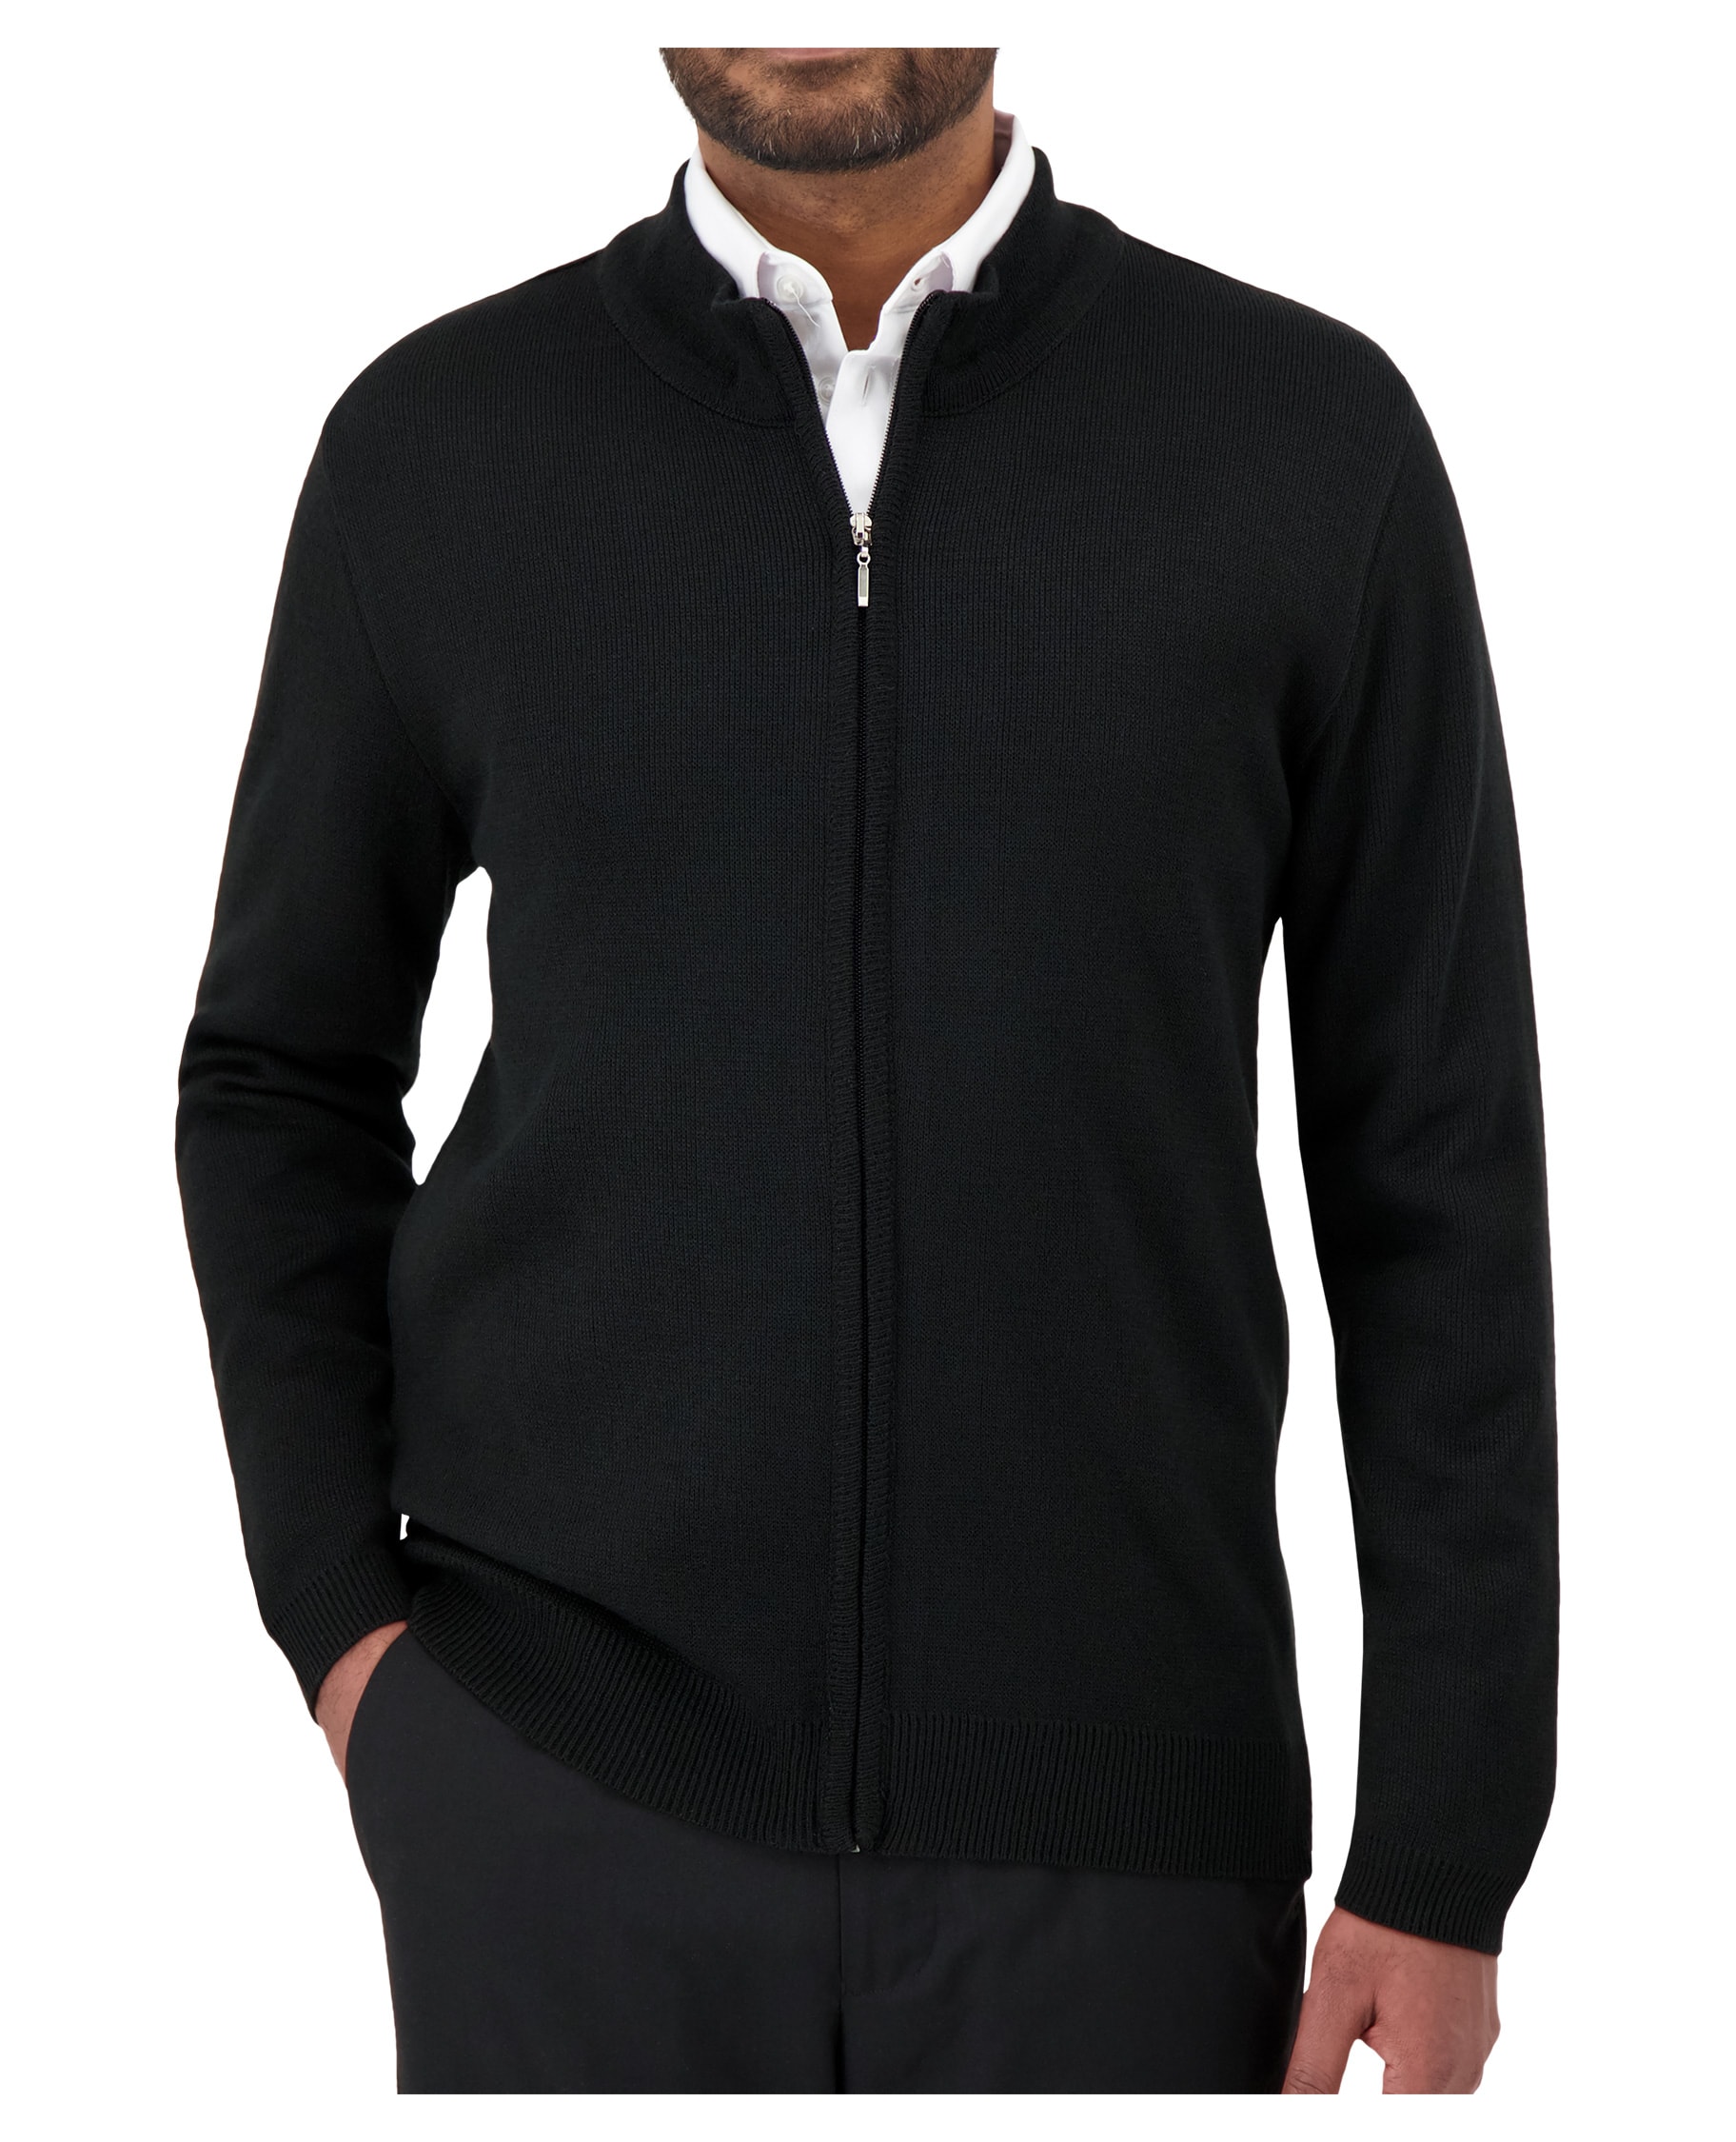 black full zip knit uniform sweater